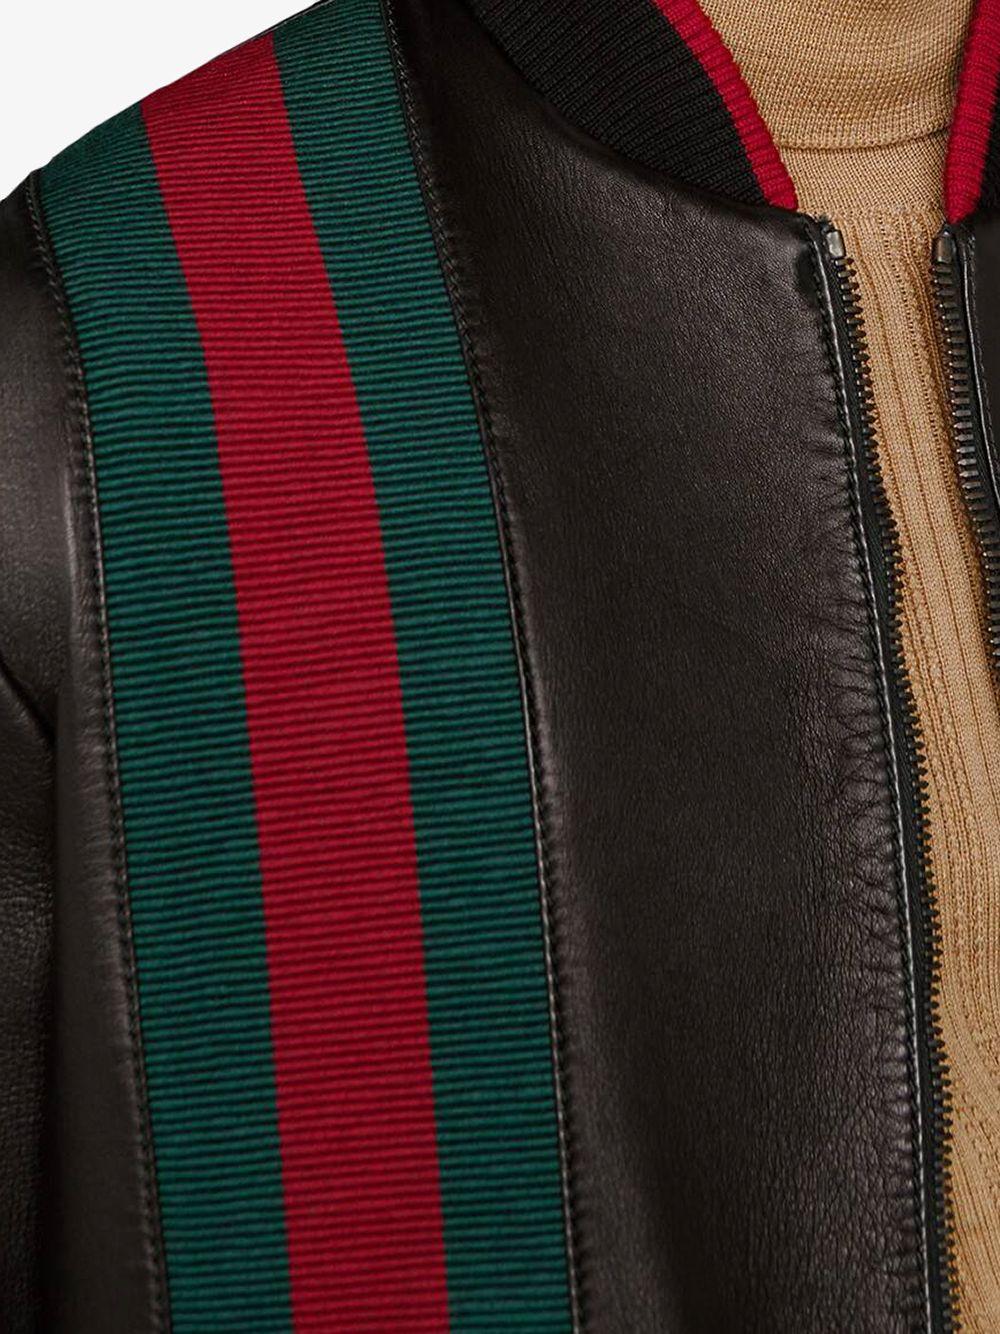 Leather jacket w/ web detail - Gucci - Men